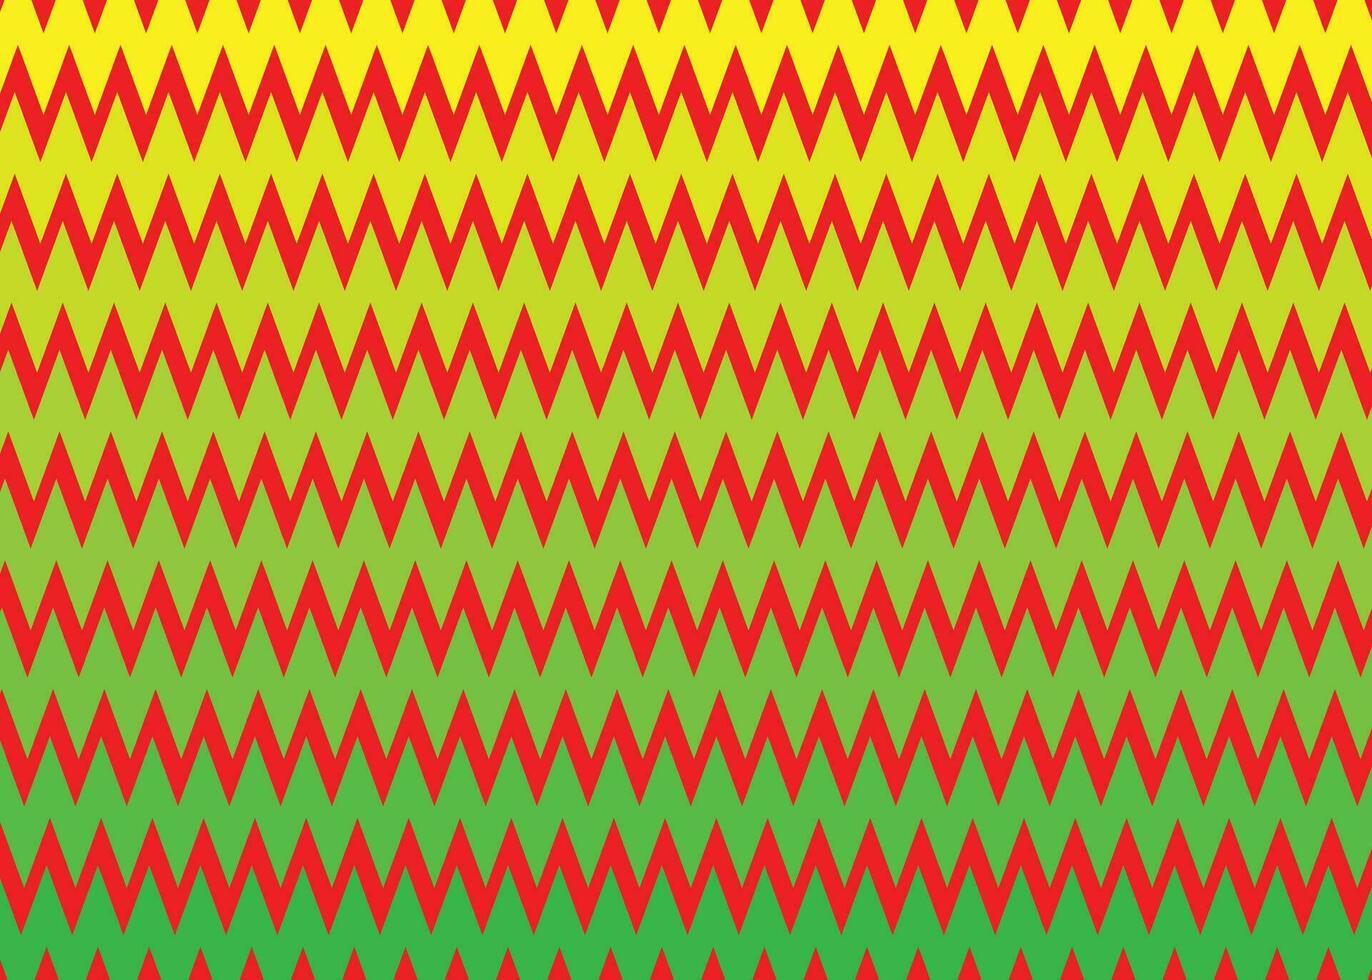 chevron zigzag naadloos patroon vector